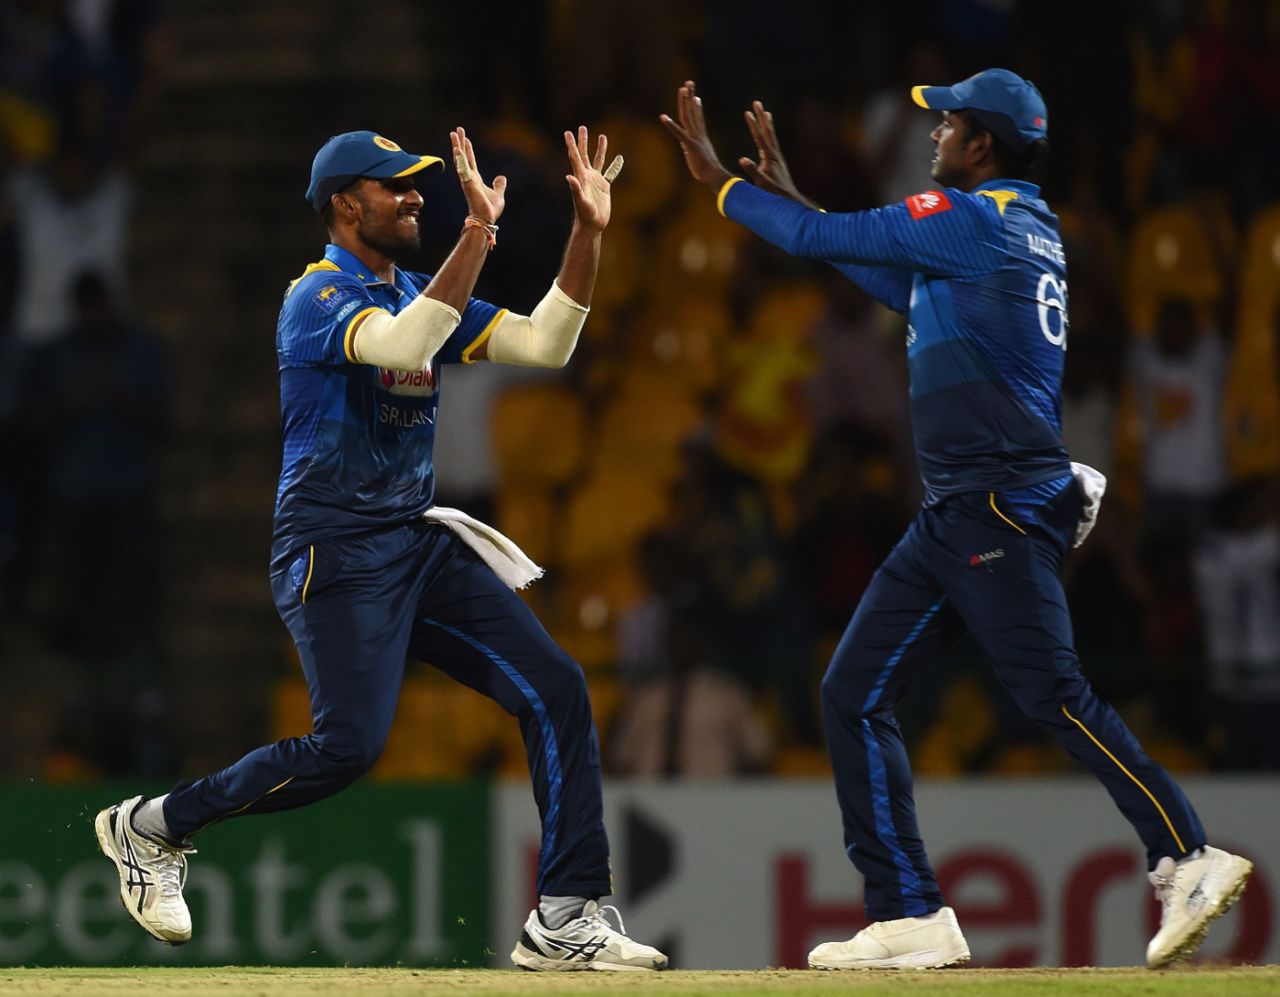 Dasun Shanaka and Angelo Mathews celebrate a wicket, Sri Lanka v South Africa, 4th ODI, Pallekele, August 8, 2018